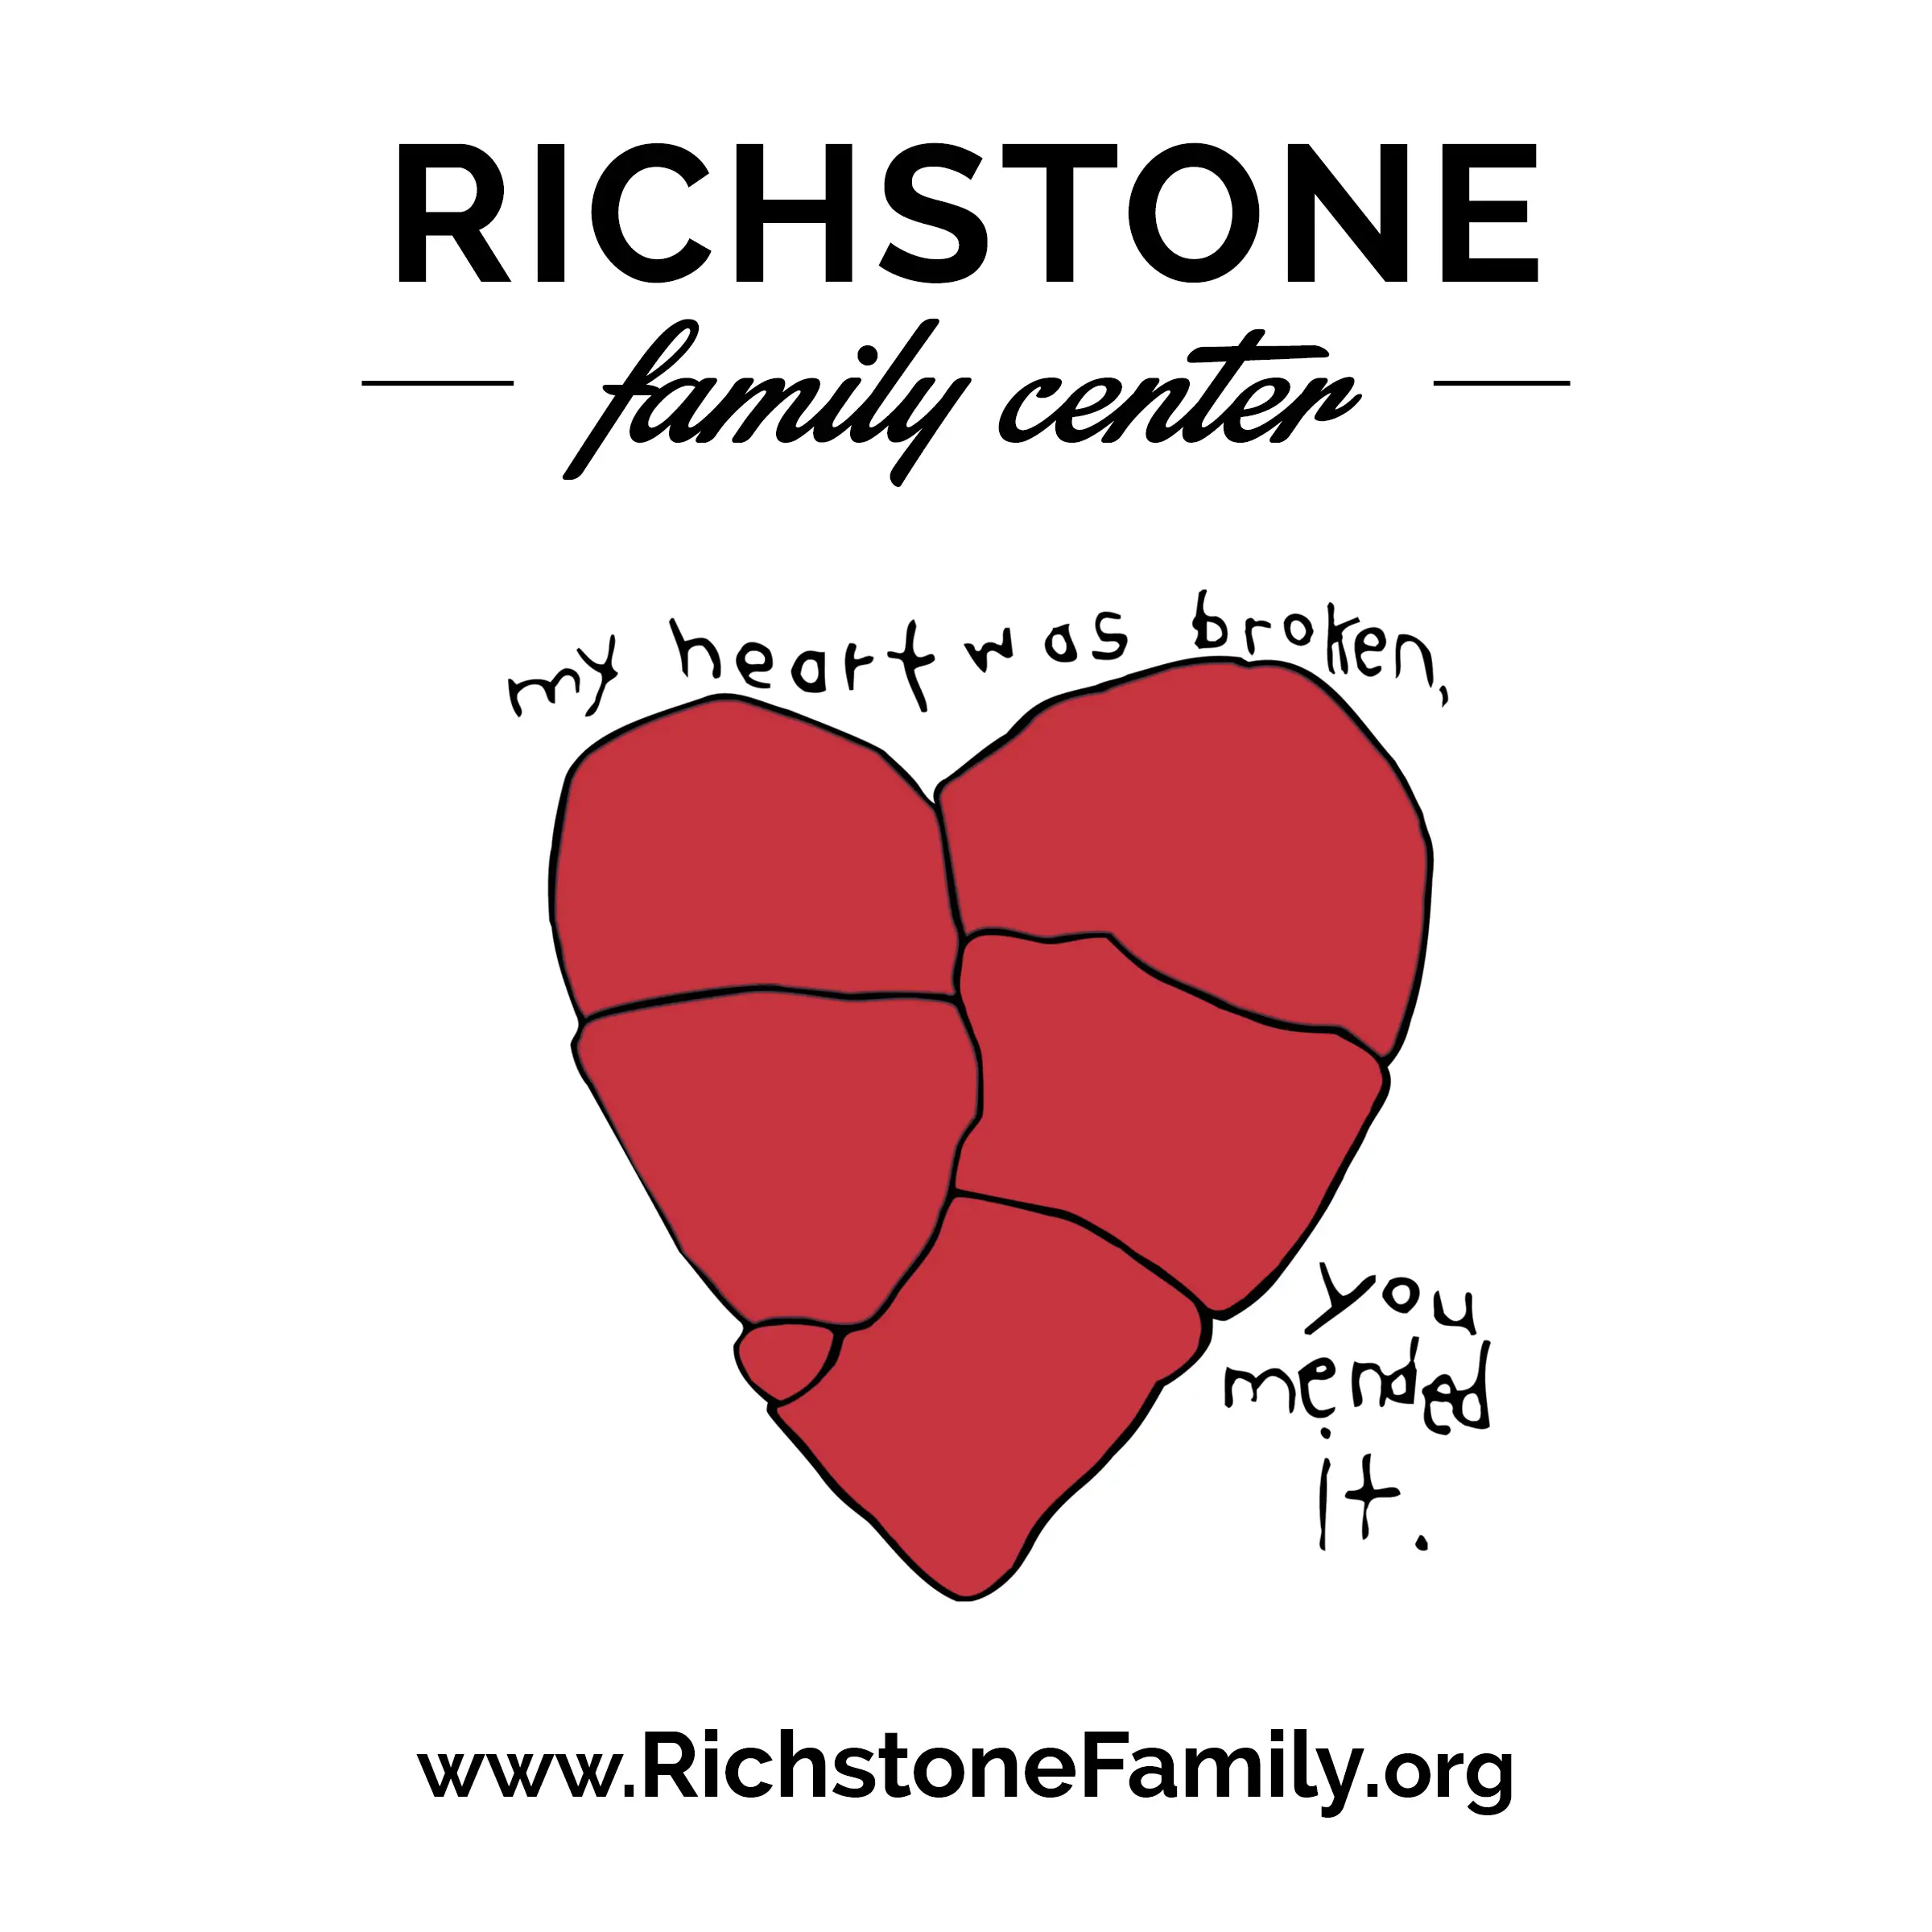 Richstone Family Center Juvenile Justice Panel